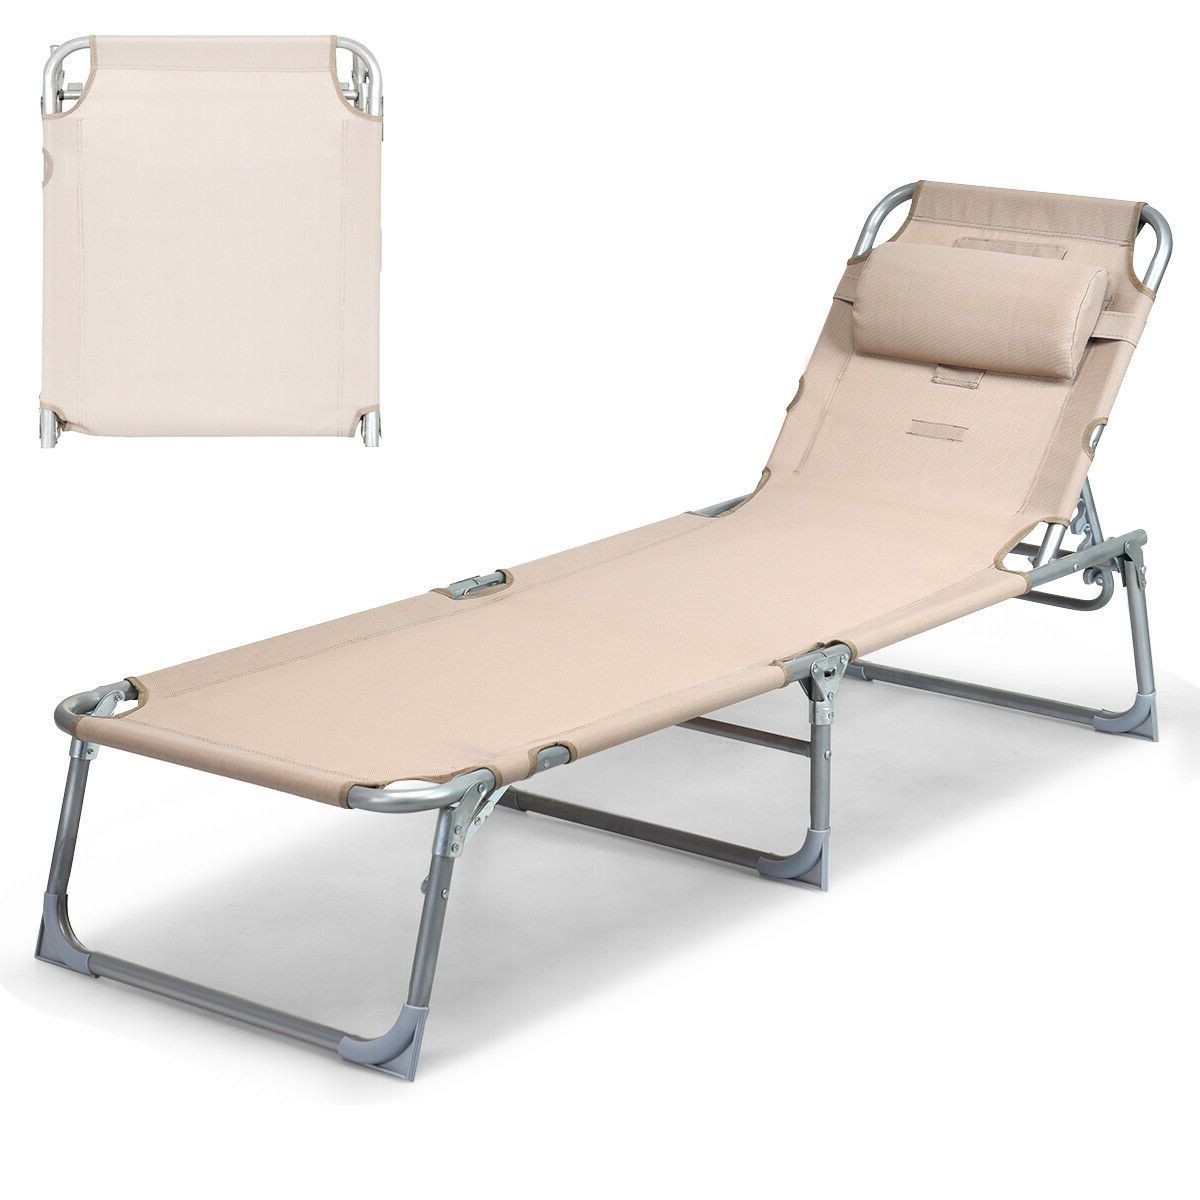 Adjustable Pool Chaise Lounge Chair Recliner Beach Outdoor Patio Deck Regarding 2020 Cart Wheel Adjustable Chaise Lounge Chairs (View 15 of 25)